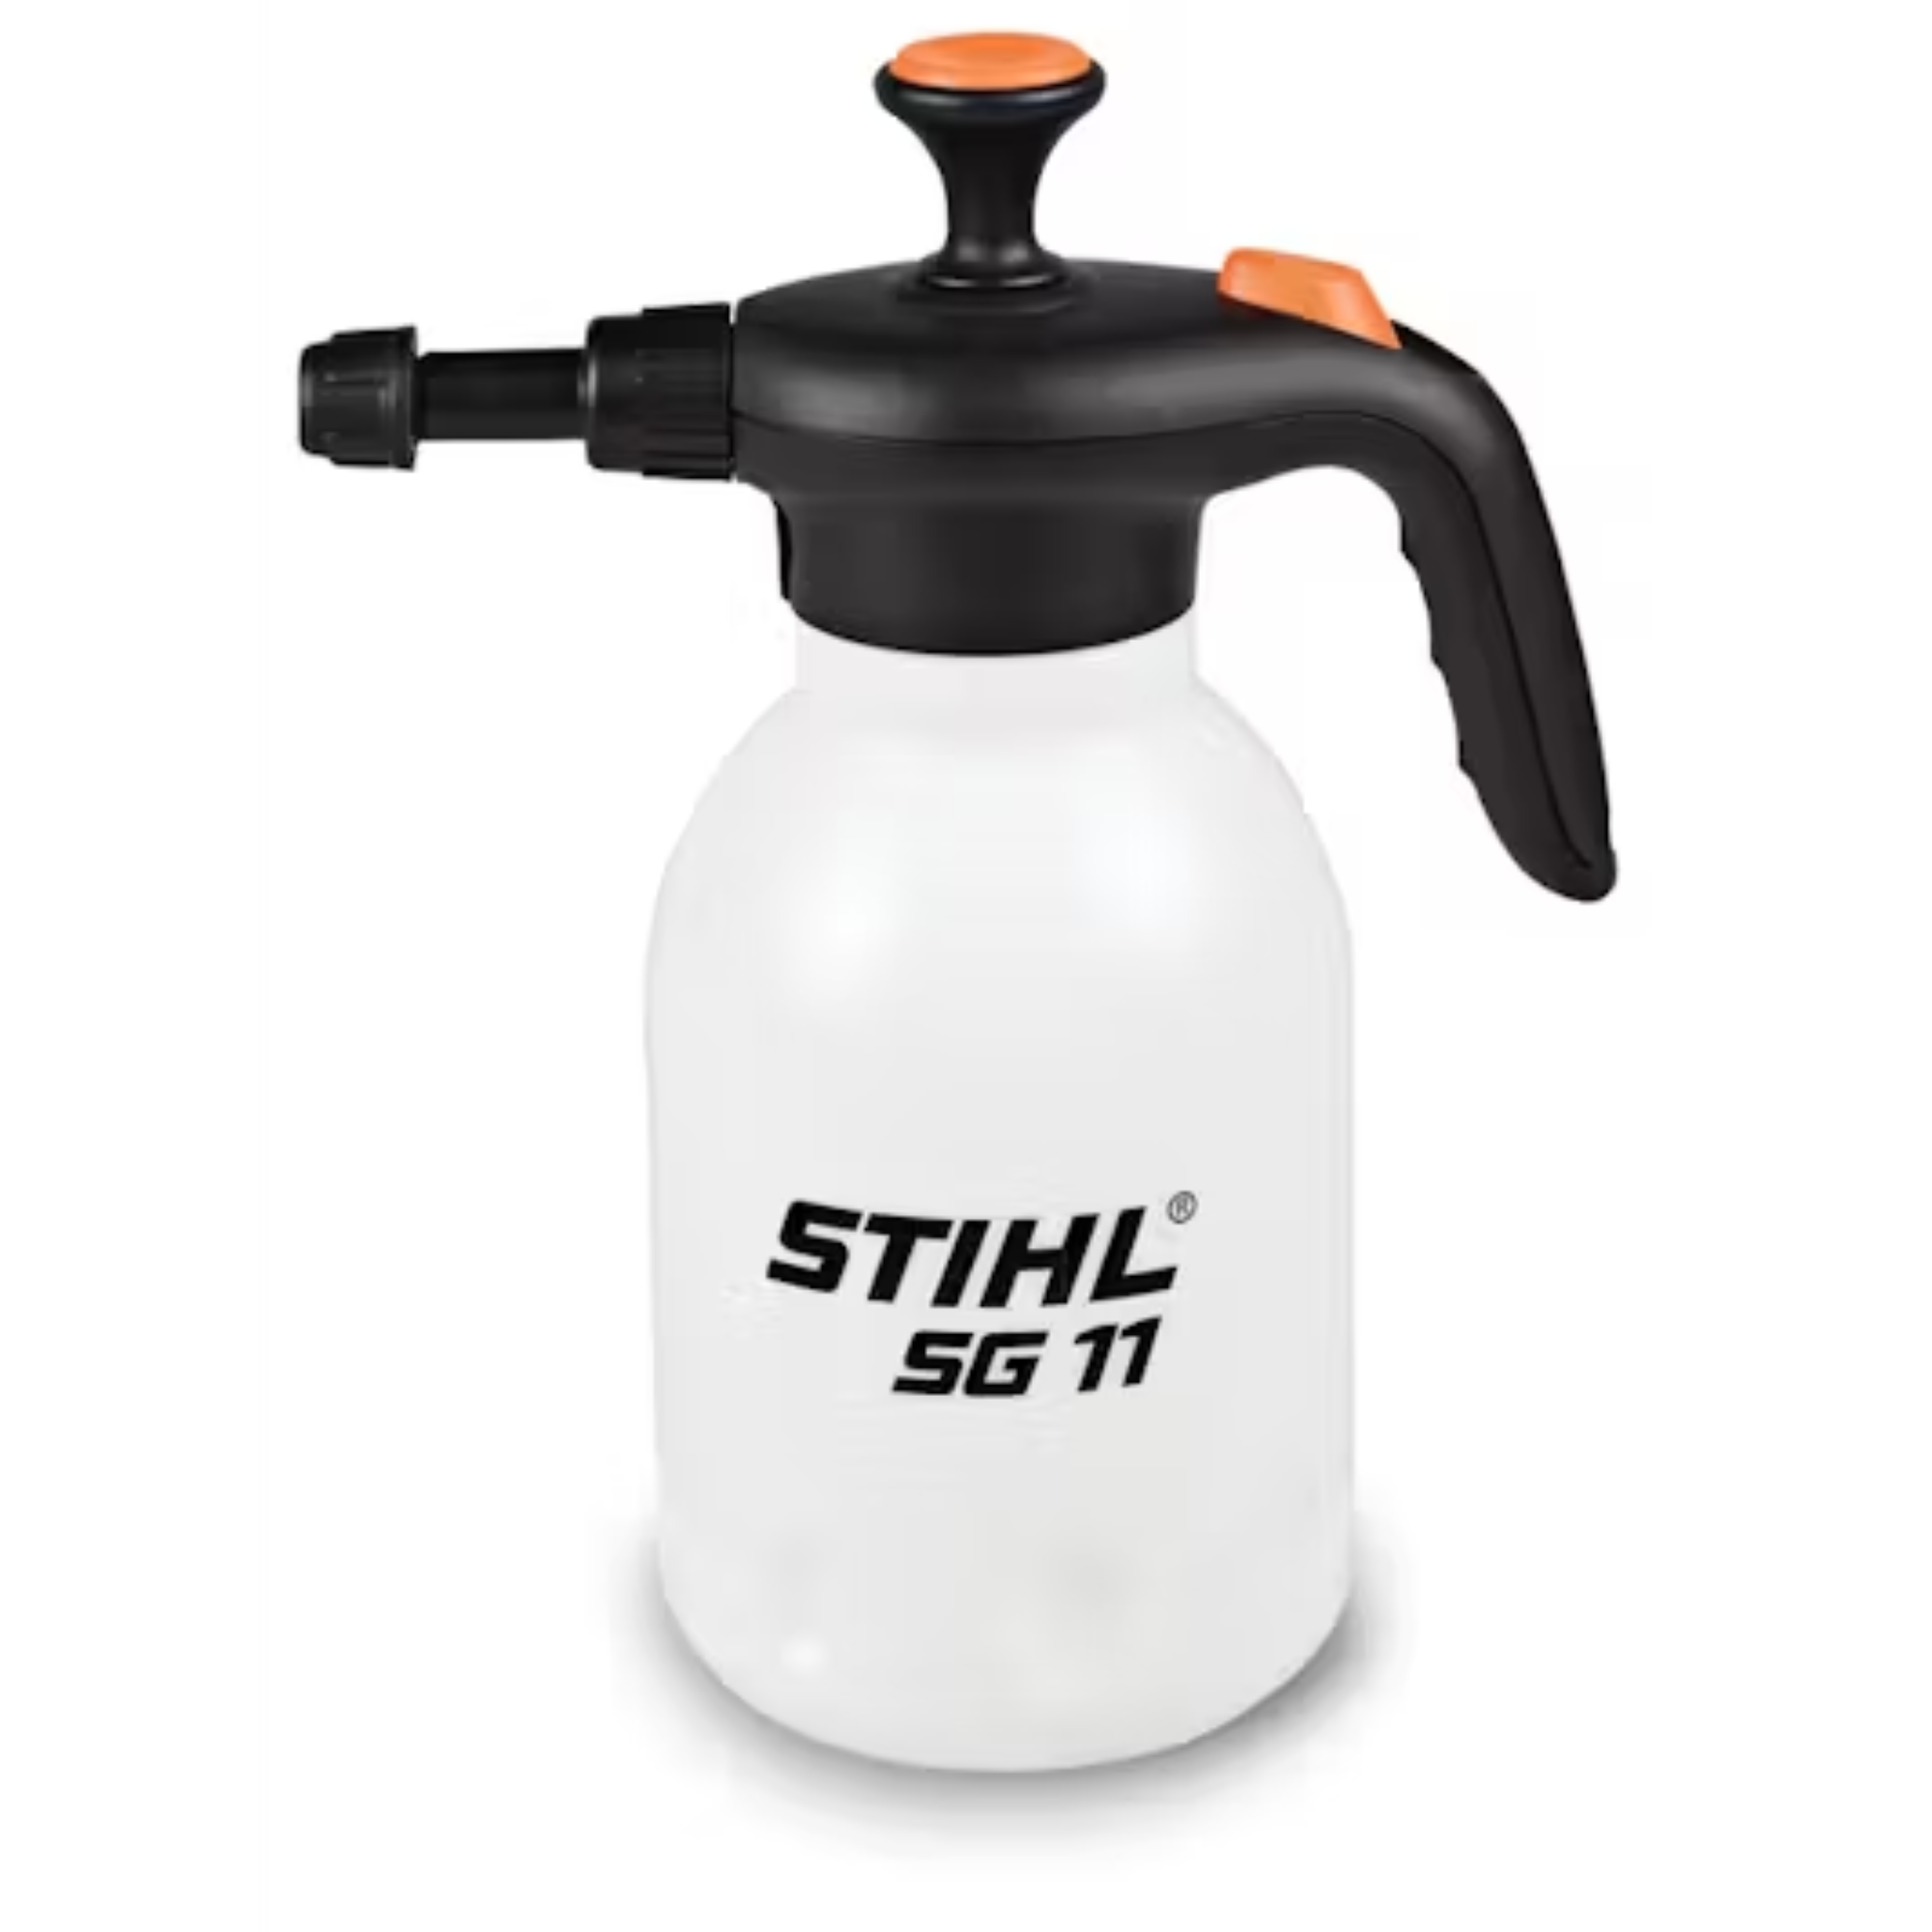 Stihl SG 11 Handheld Sprayer | SG11